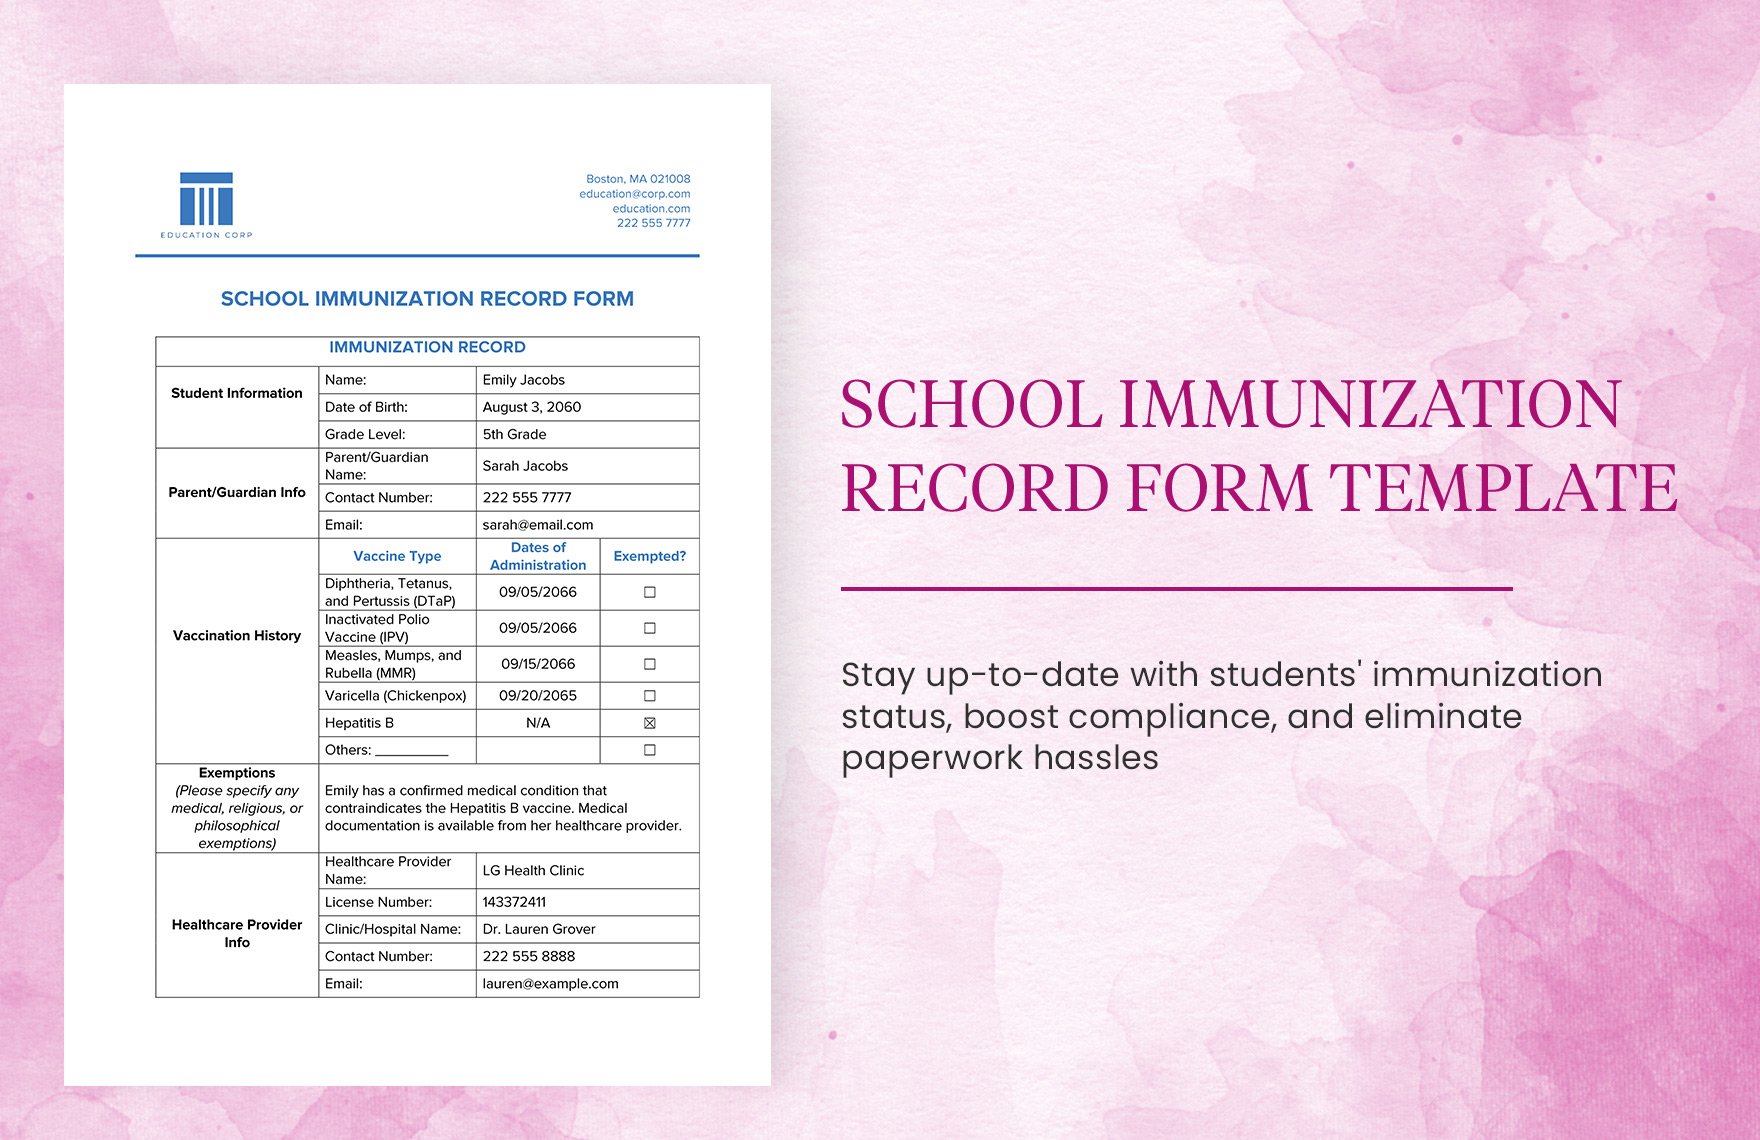 School Immunization Record Form Template in Word, Google Docs, PDF